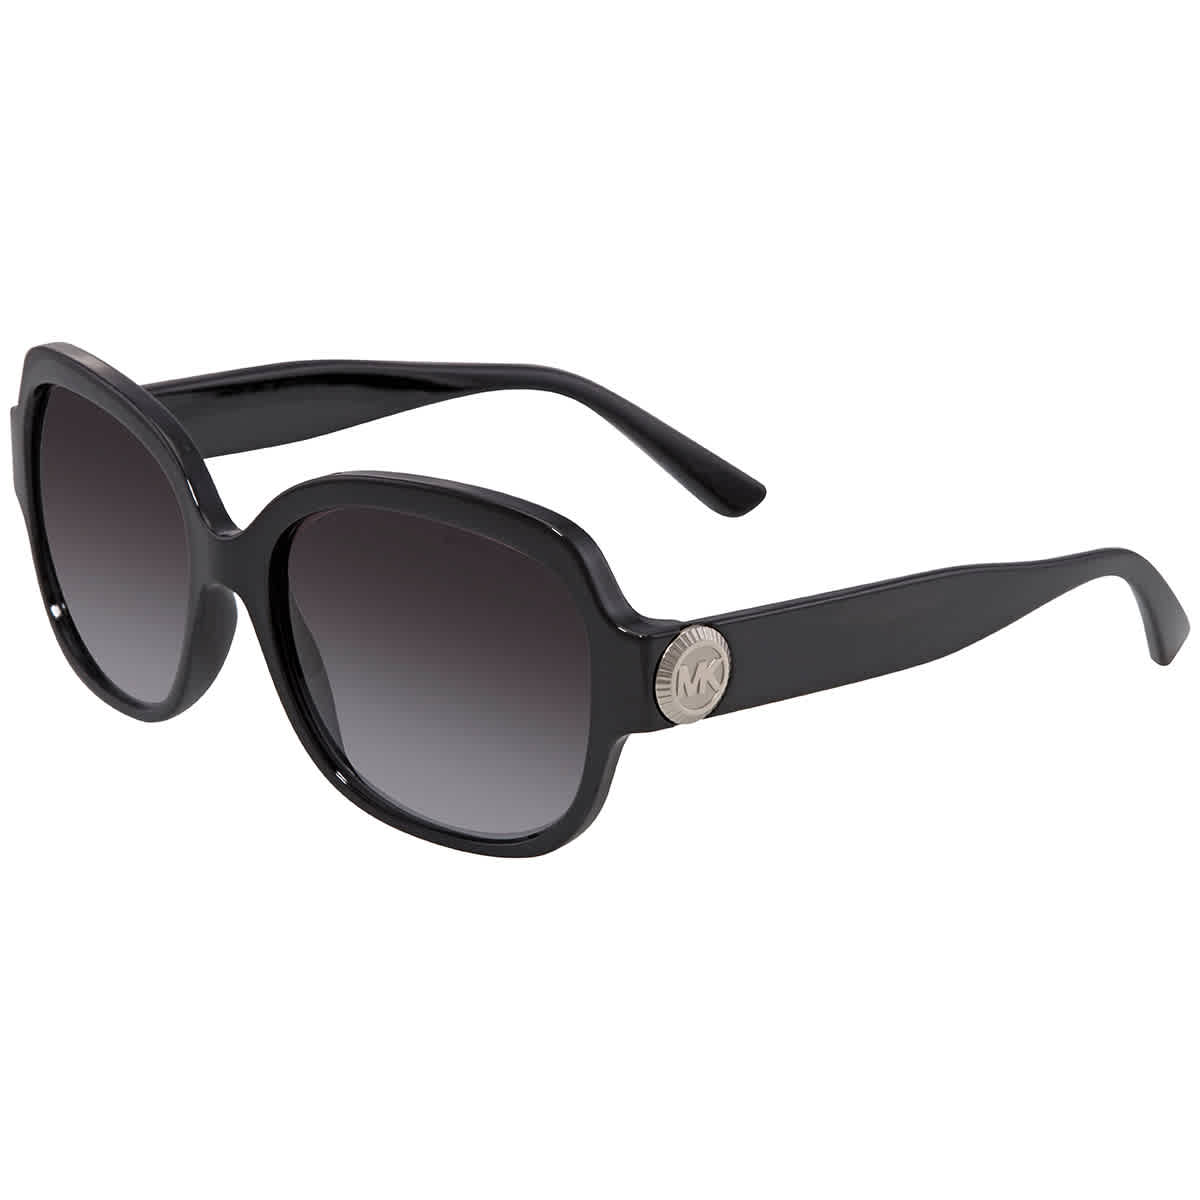 Michael Kors Suz  Plastic Womens Square Sunglasses Black 56.2mm Adult - image 1 of 7